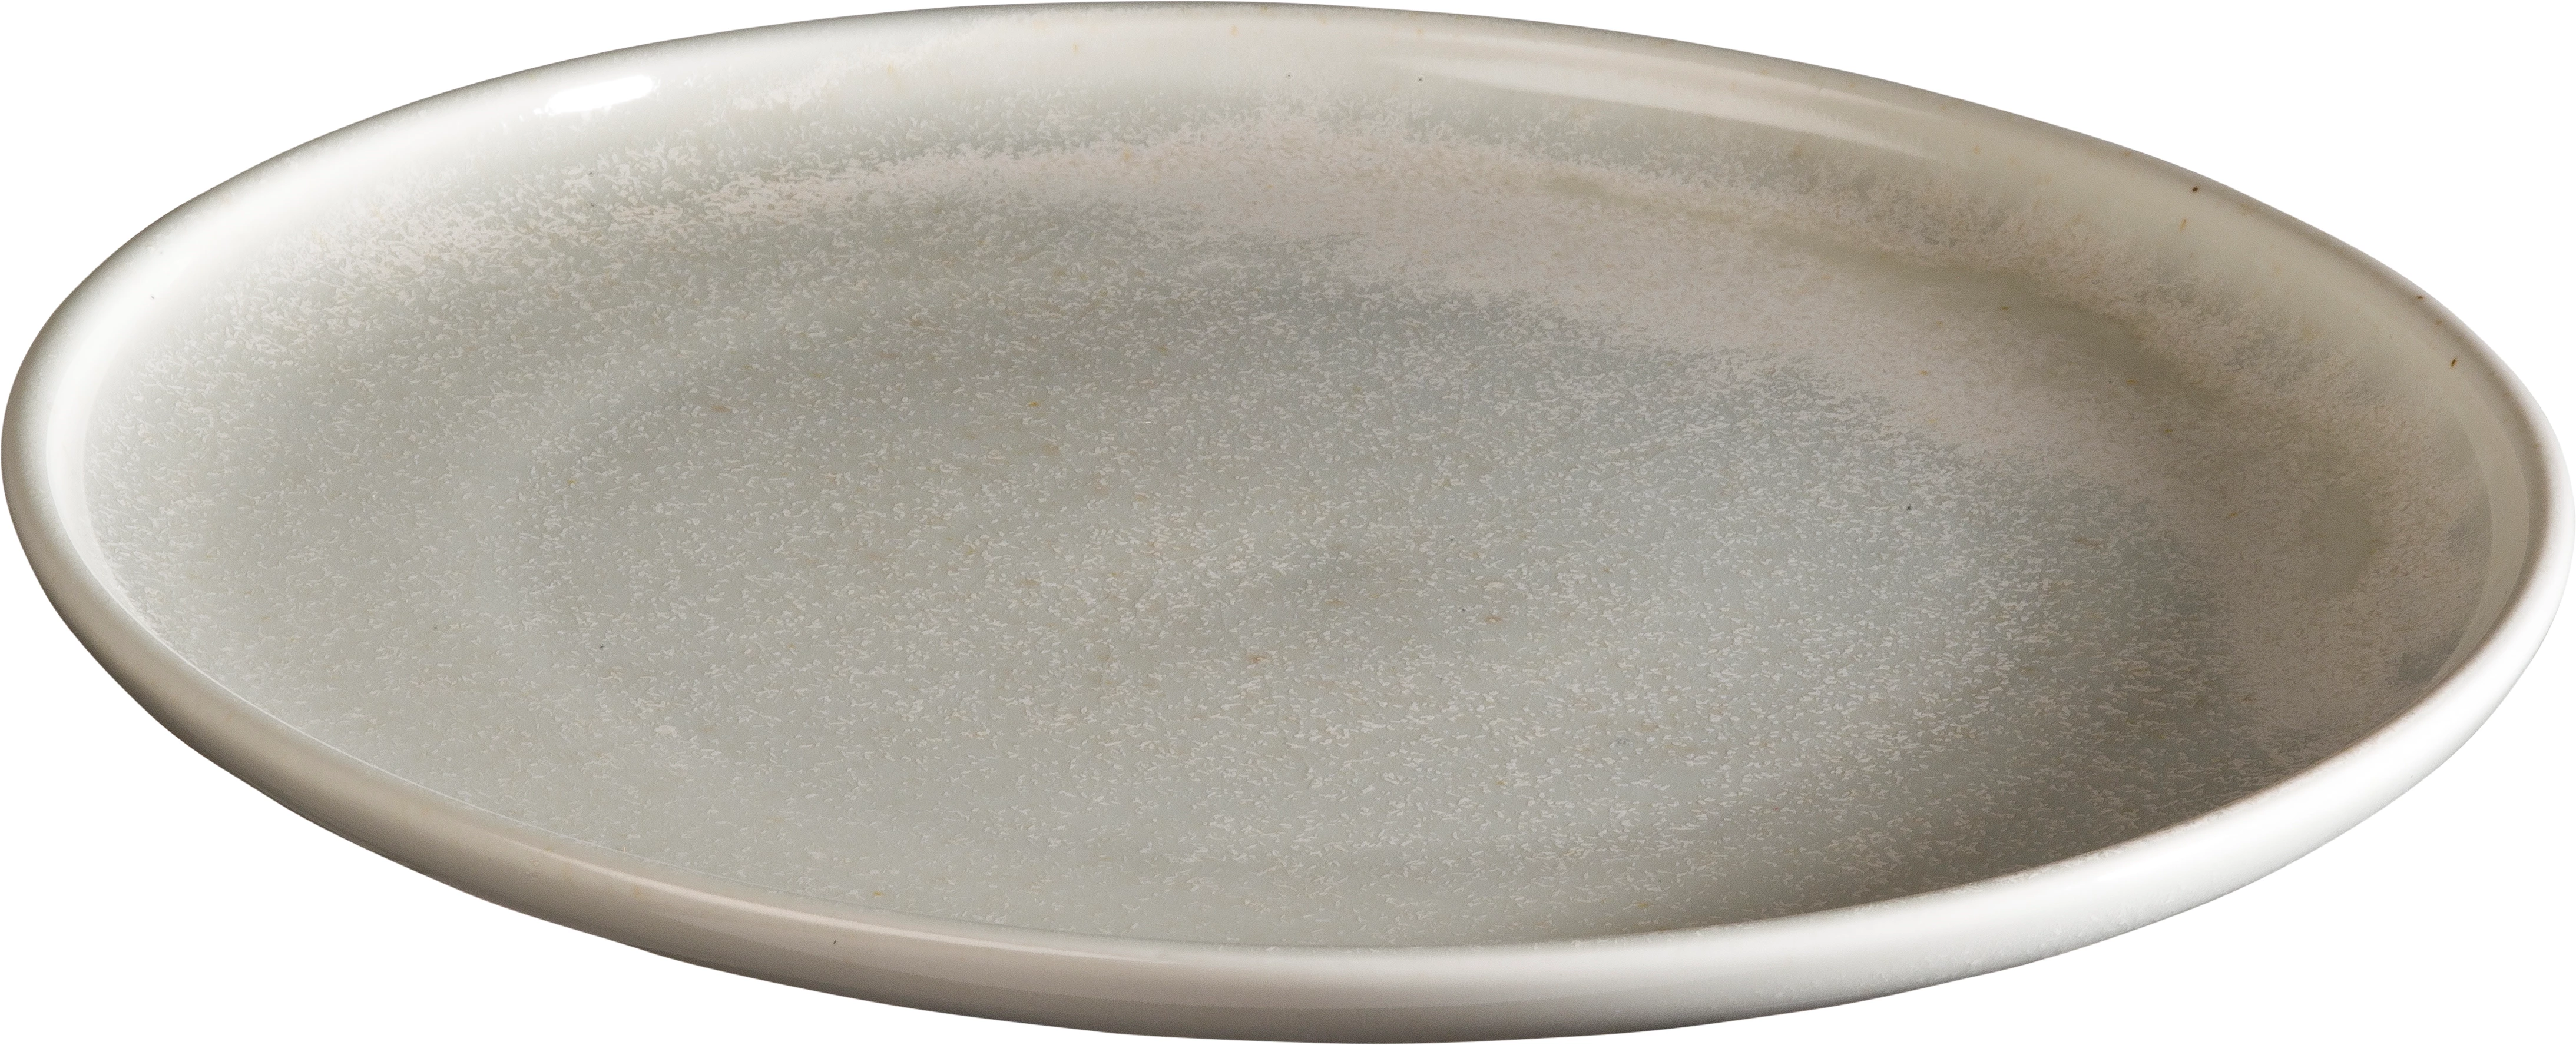 Qmulus tallerken uden fane, grå, ø28,5 cm